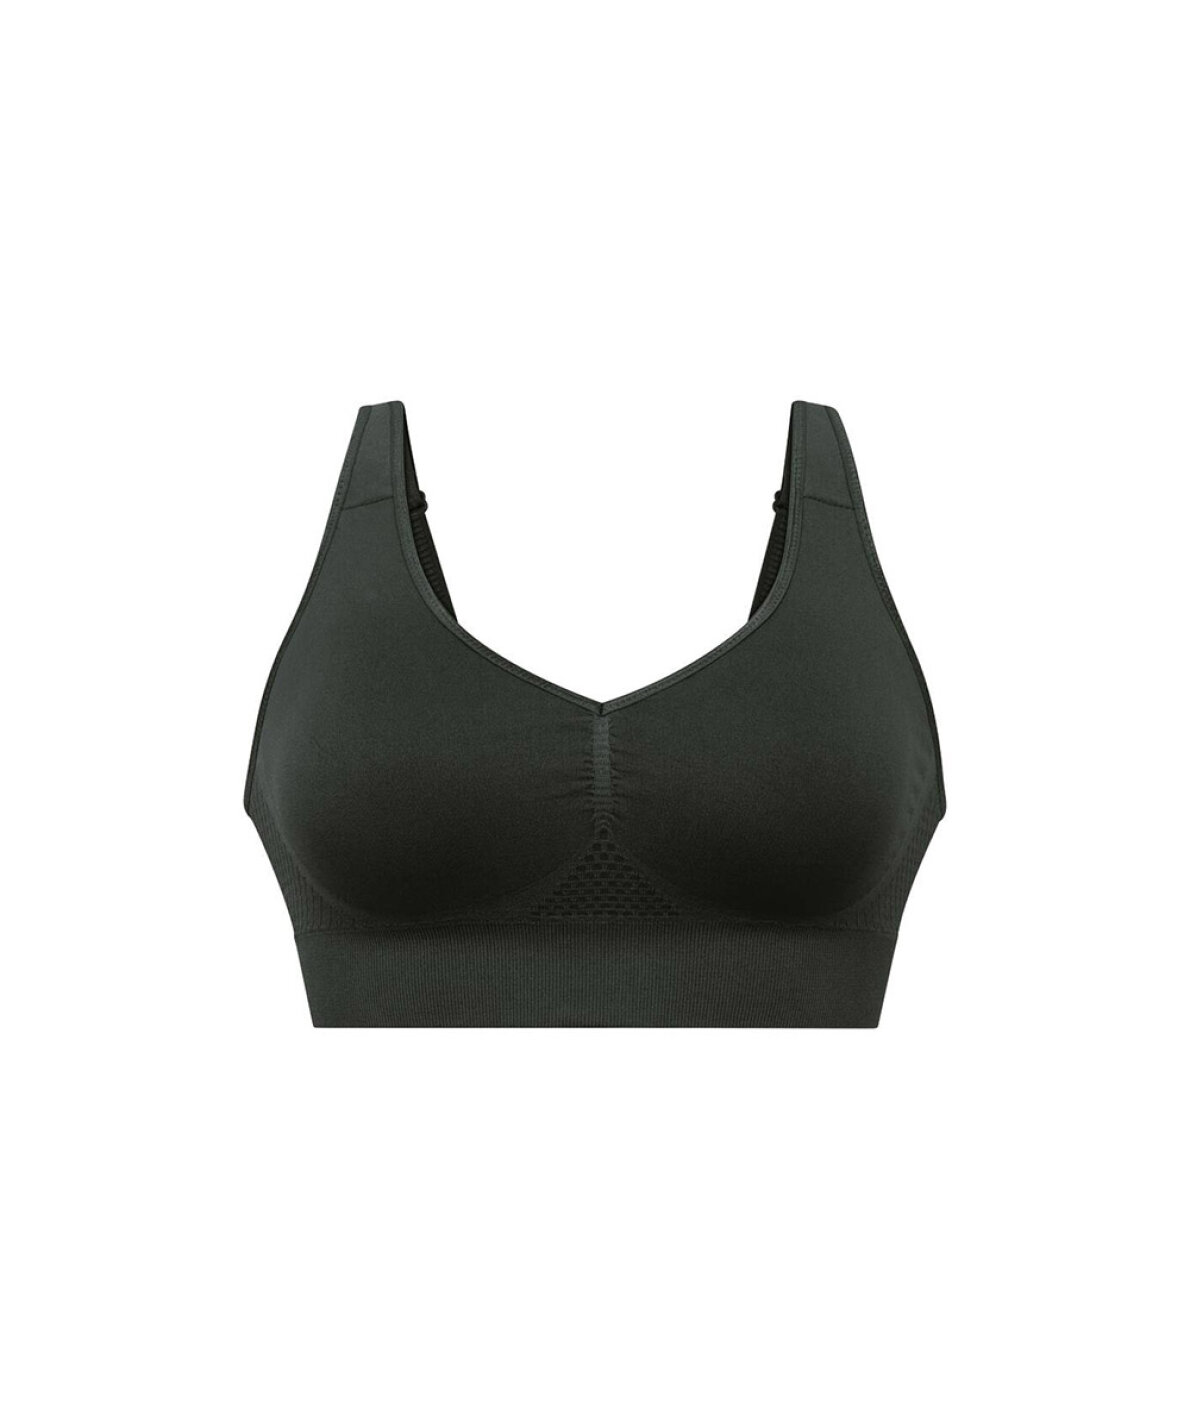 https://www.wunderwear.dk/shared/94/38/anita-lotta-post-mastectomy-bra_1190x1428c.jpg